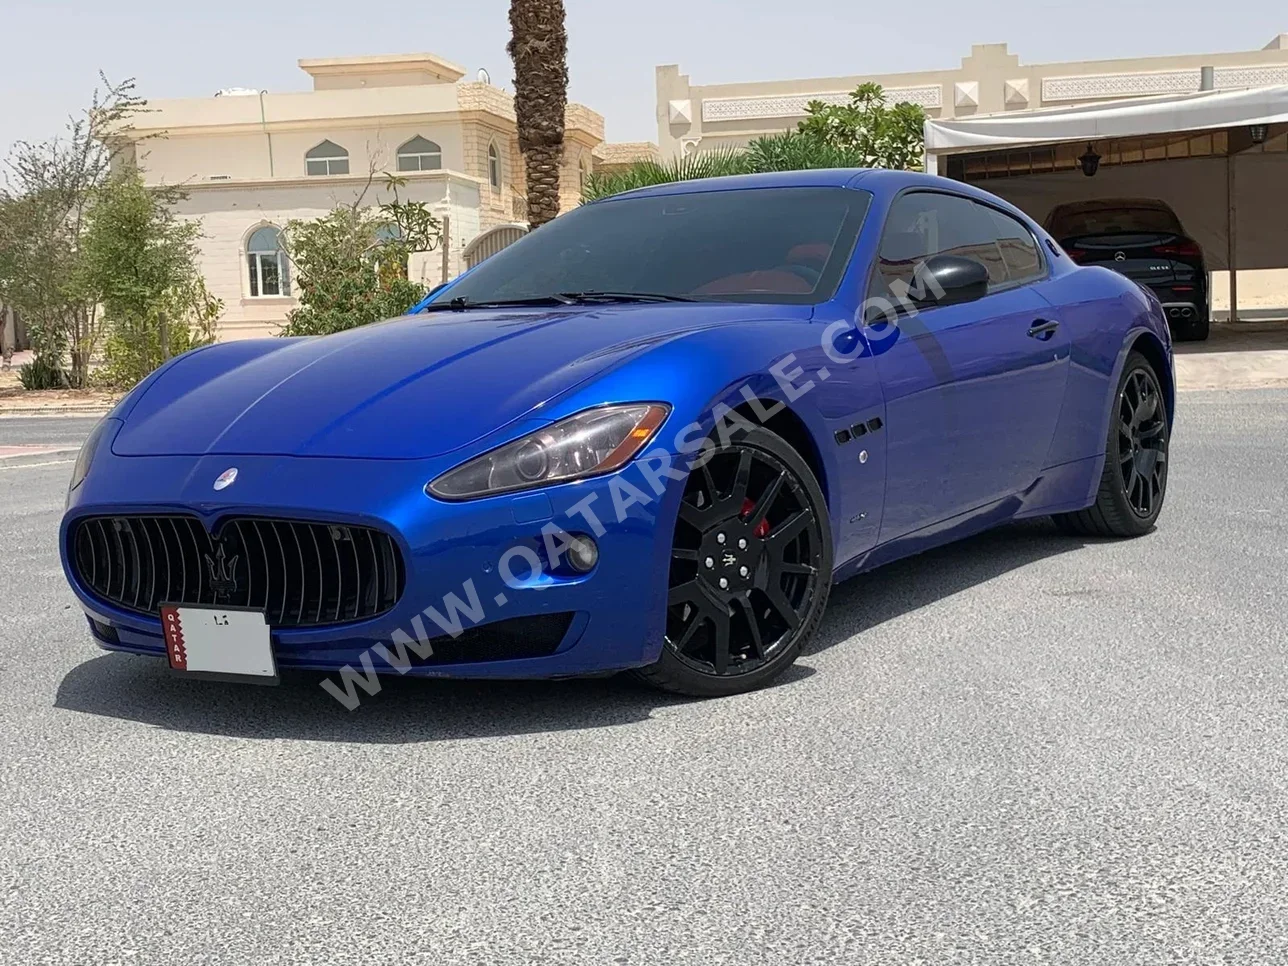 Maserati  GranTurismo  2012  Automatic  53,000 Km  8 Cylinder  Rear Wheel Drive (RWD)  Coupe / Sport  Blue